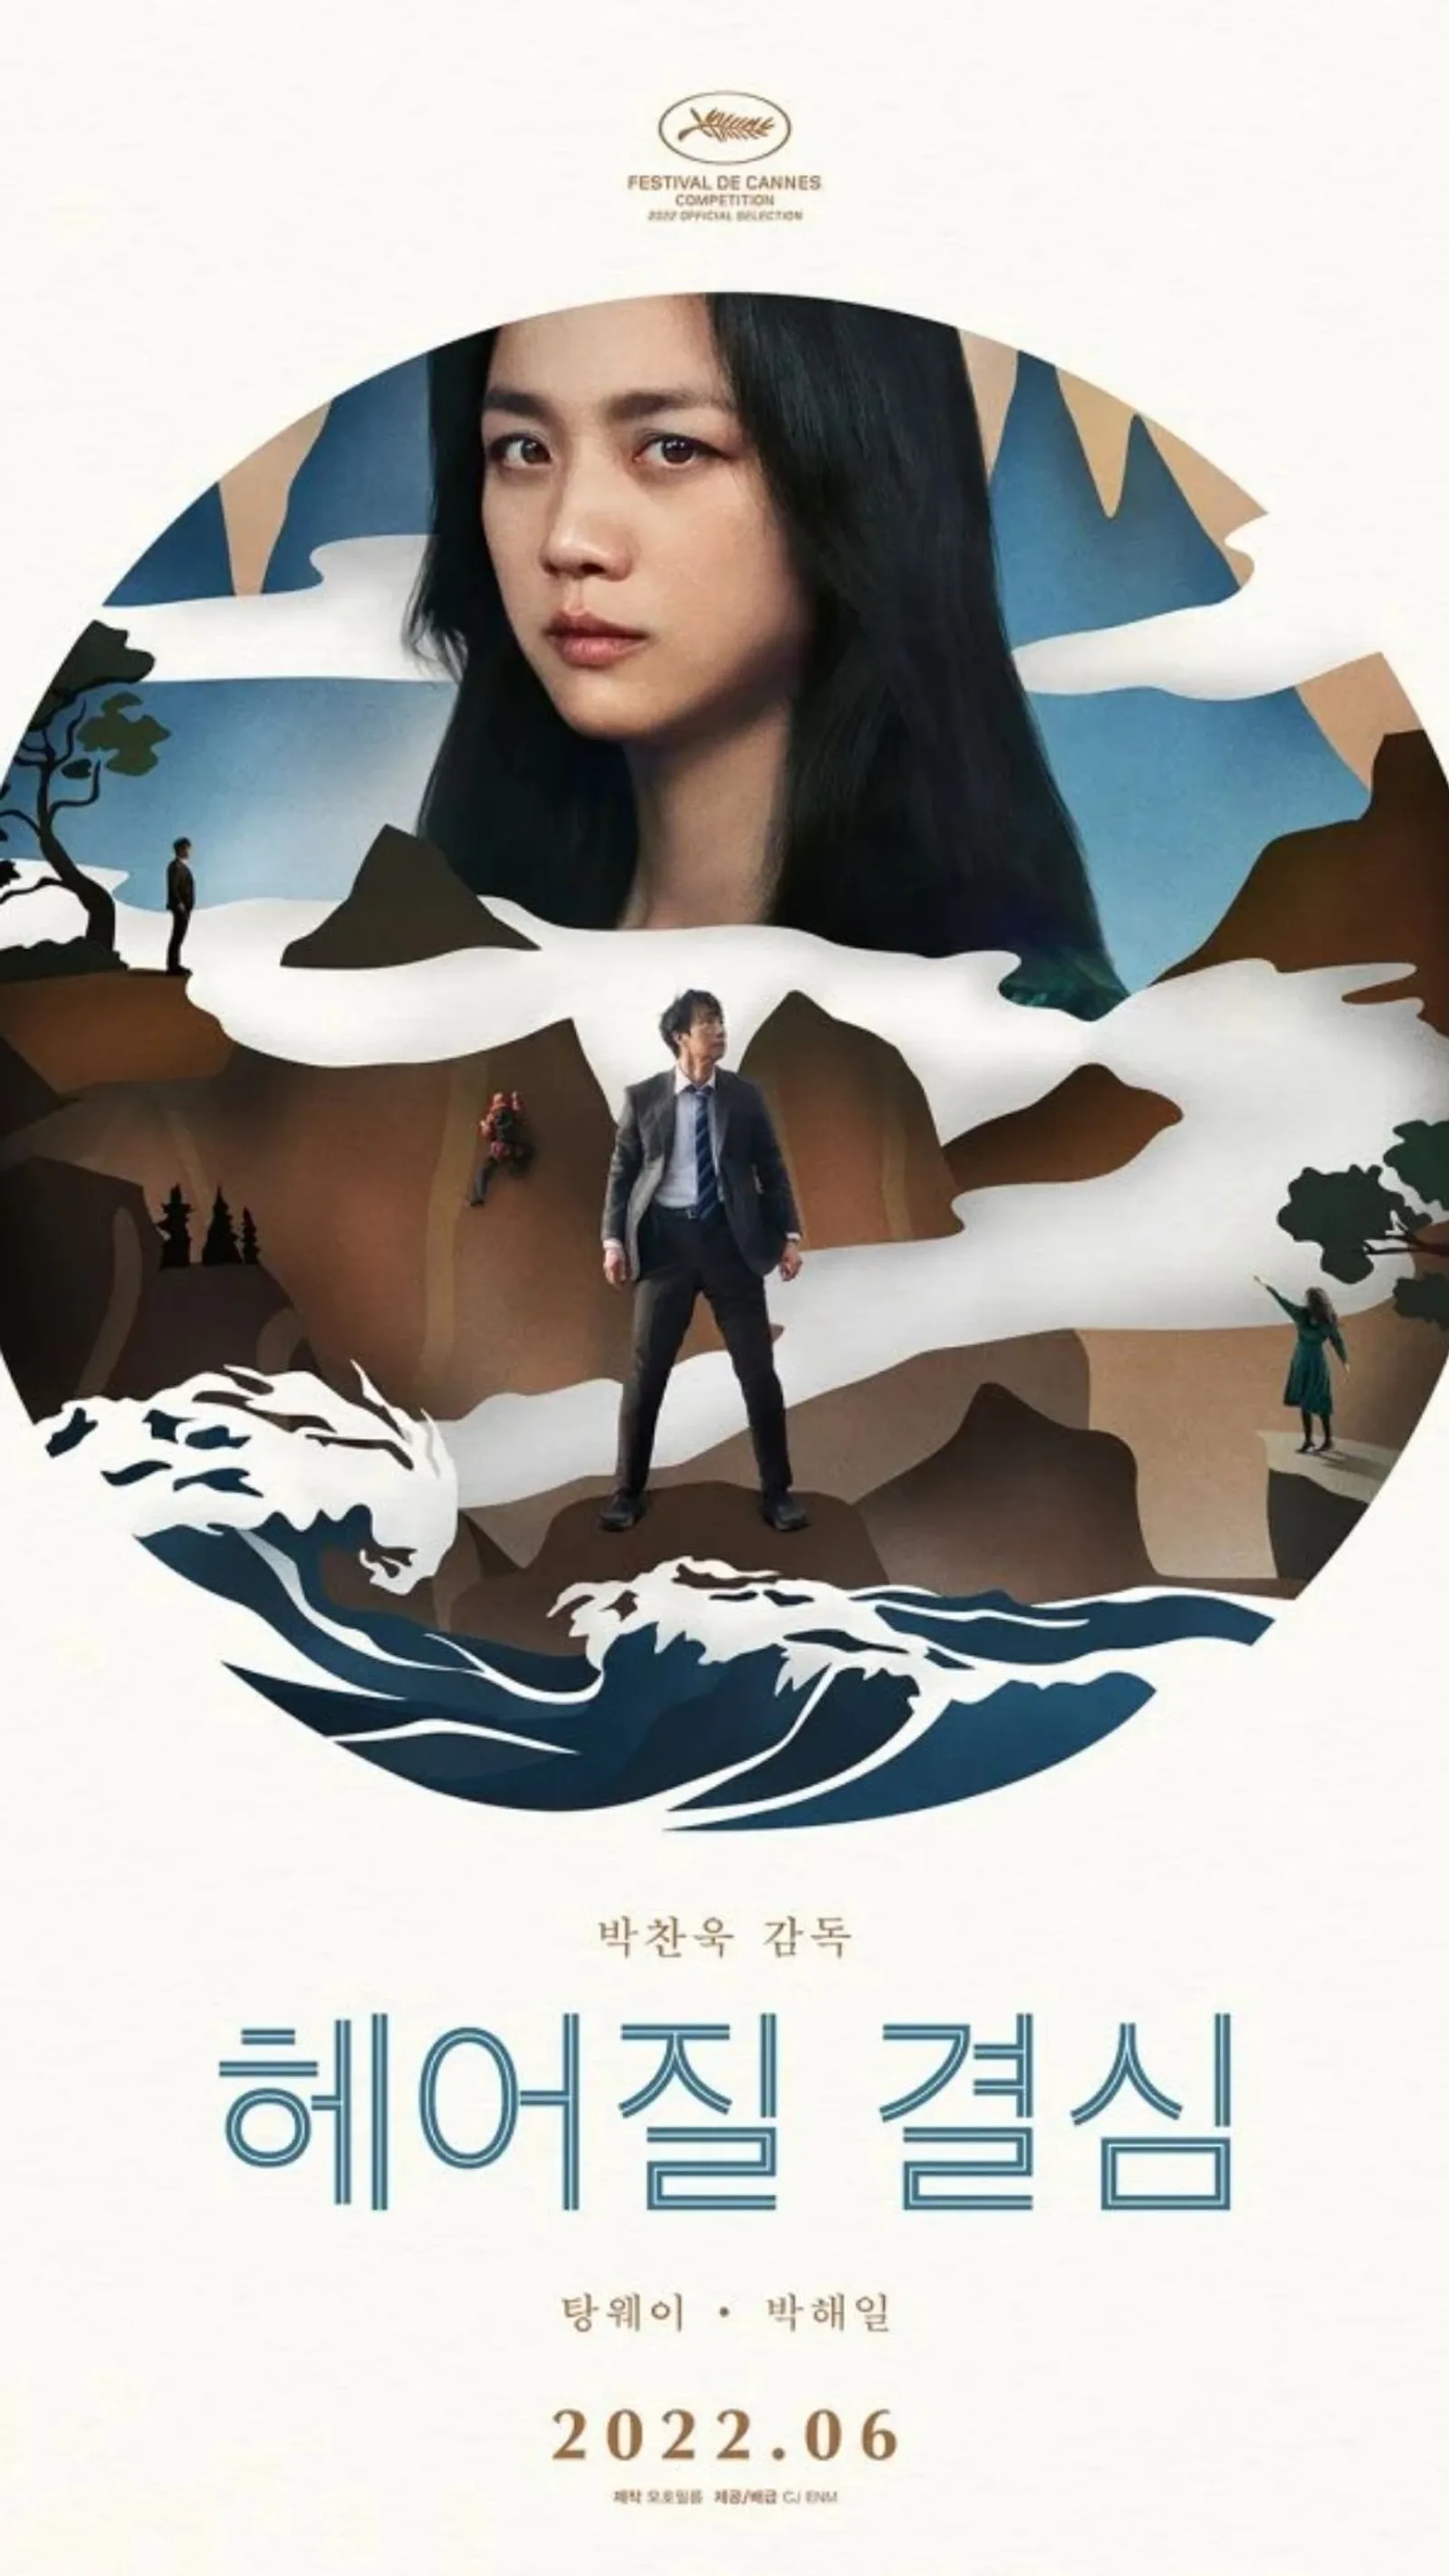 Tayang Perdana, 3 Film Korea ini Masuk Festival Film Cannes